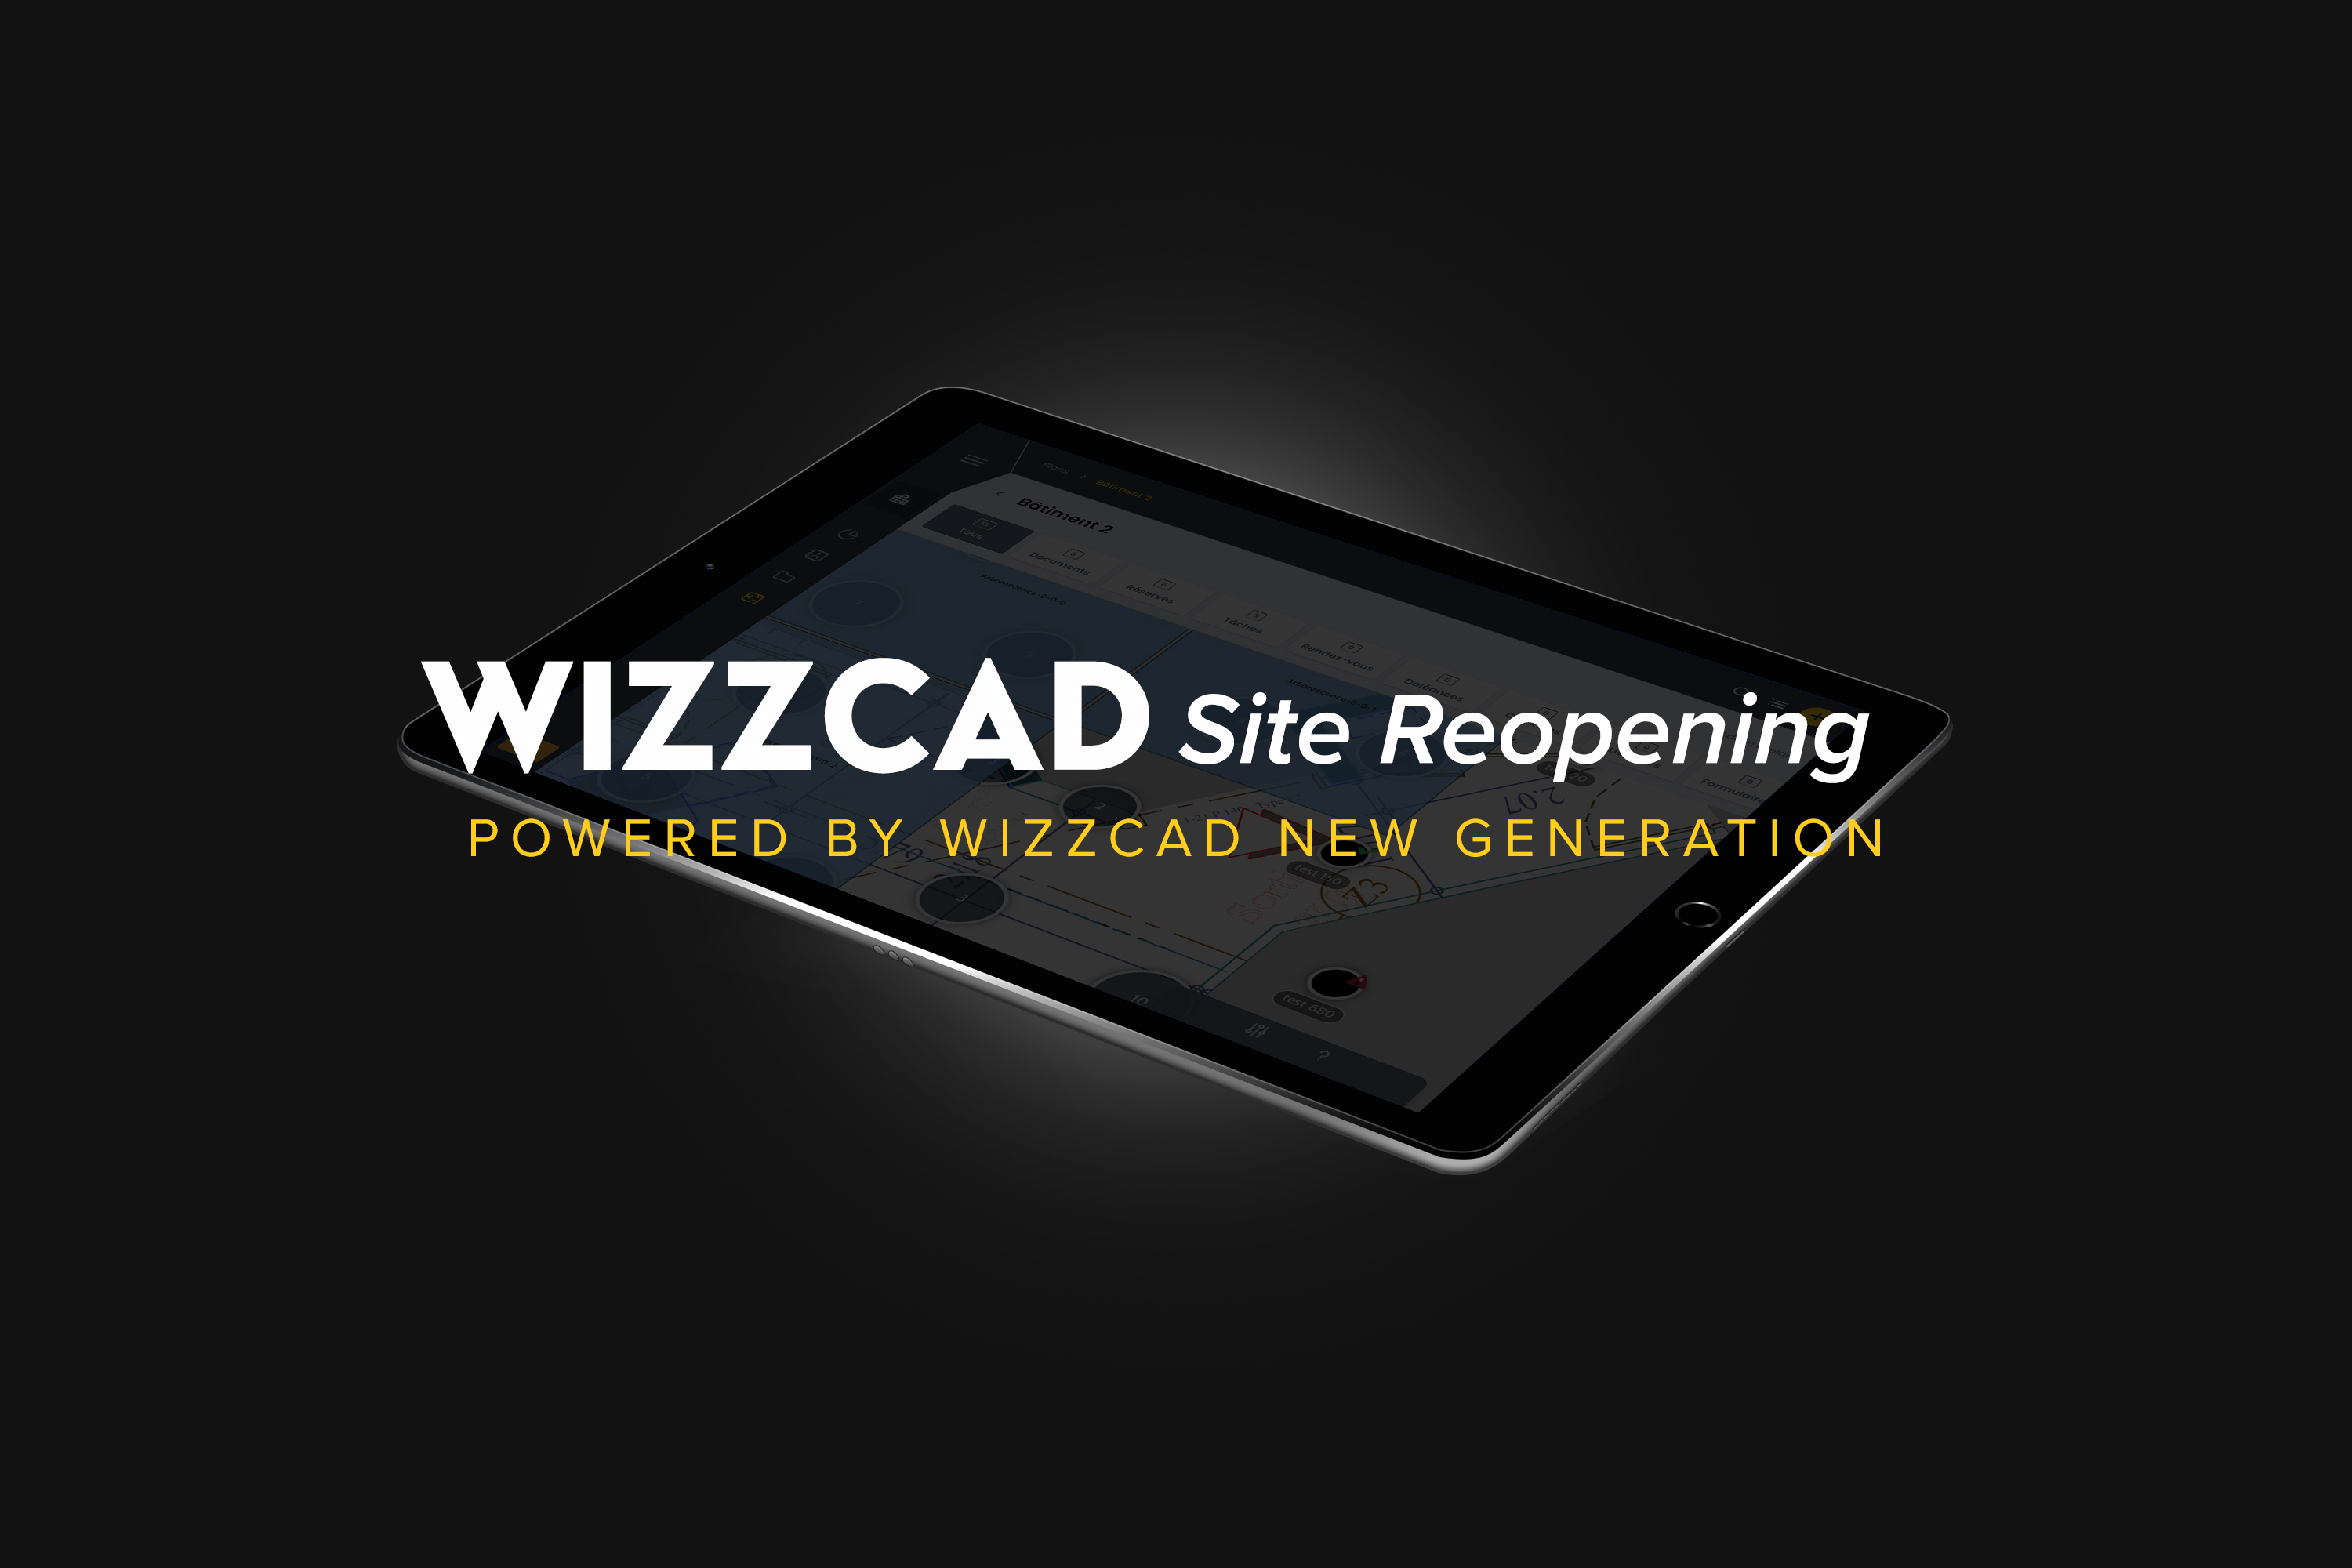 application wizzcad reprise chantier